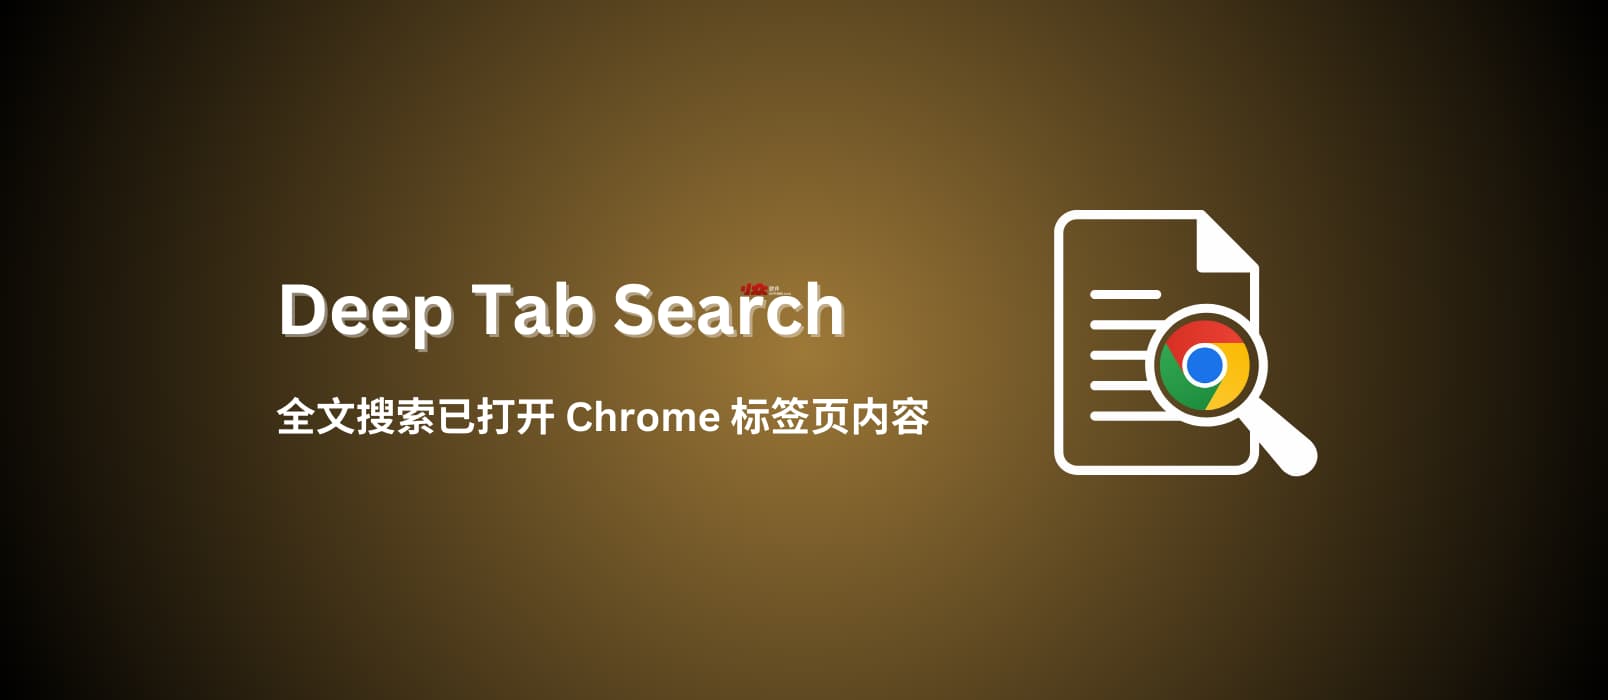 Deep Tab Search –  全文搜索已打开 Chrome 标签页内容，支持中文